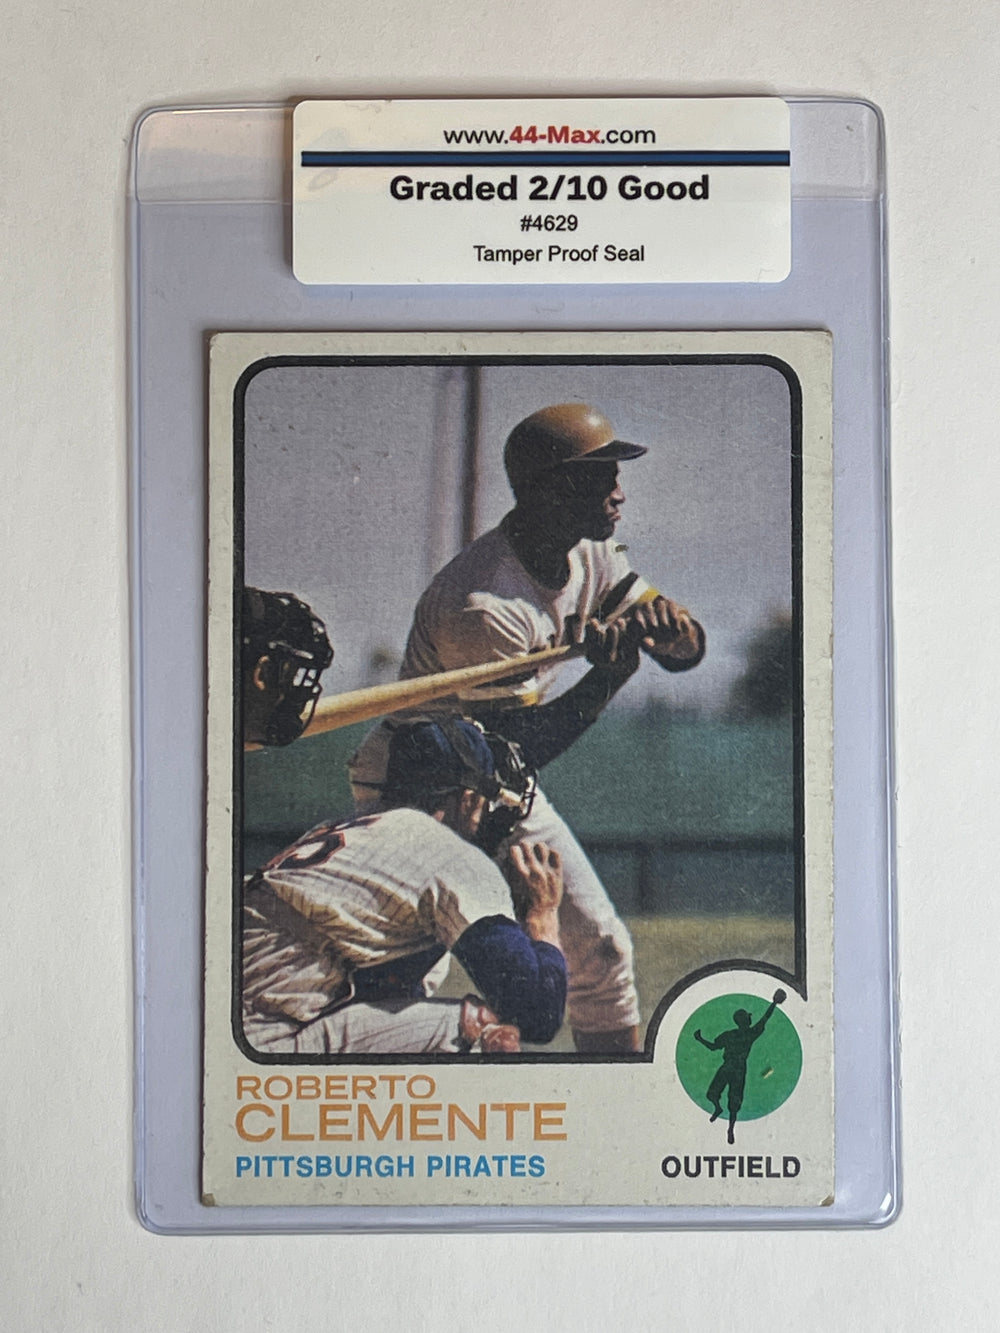 Roberto Clemente 1973 Topps Baseball Card. 44-Max 2/10 Good #4629